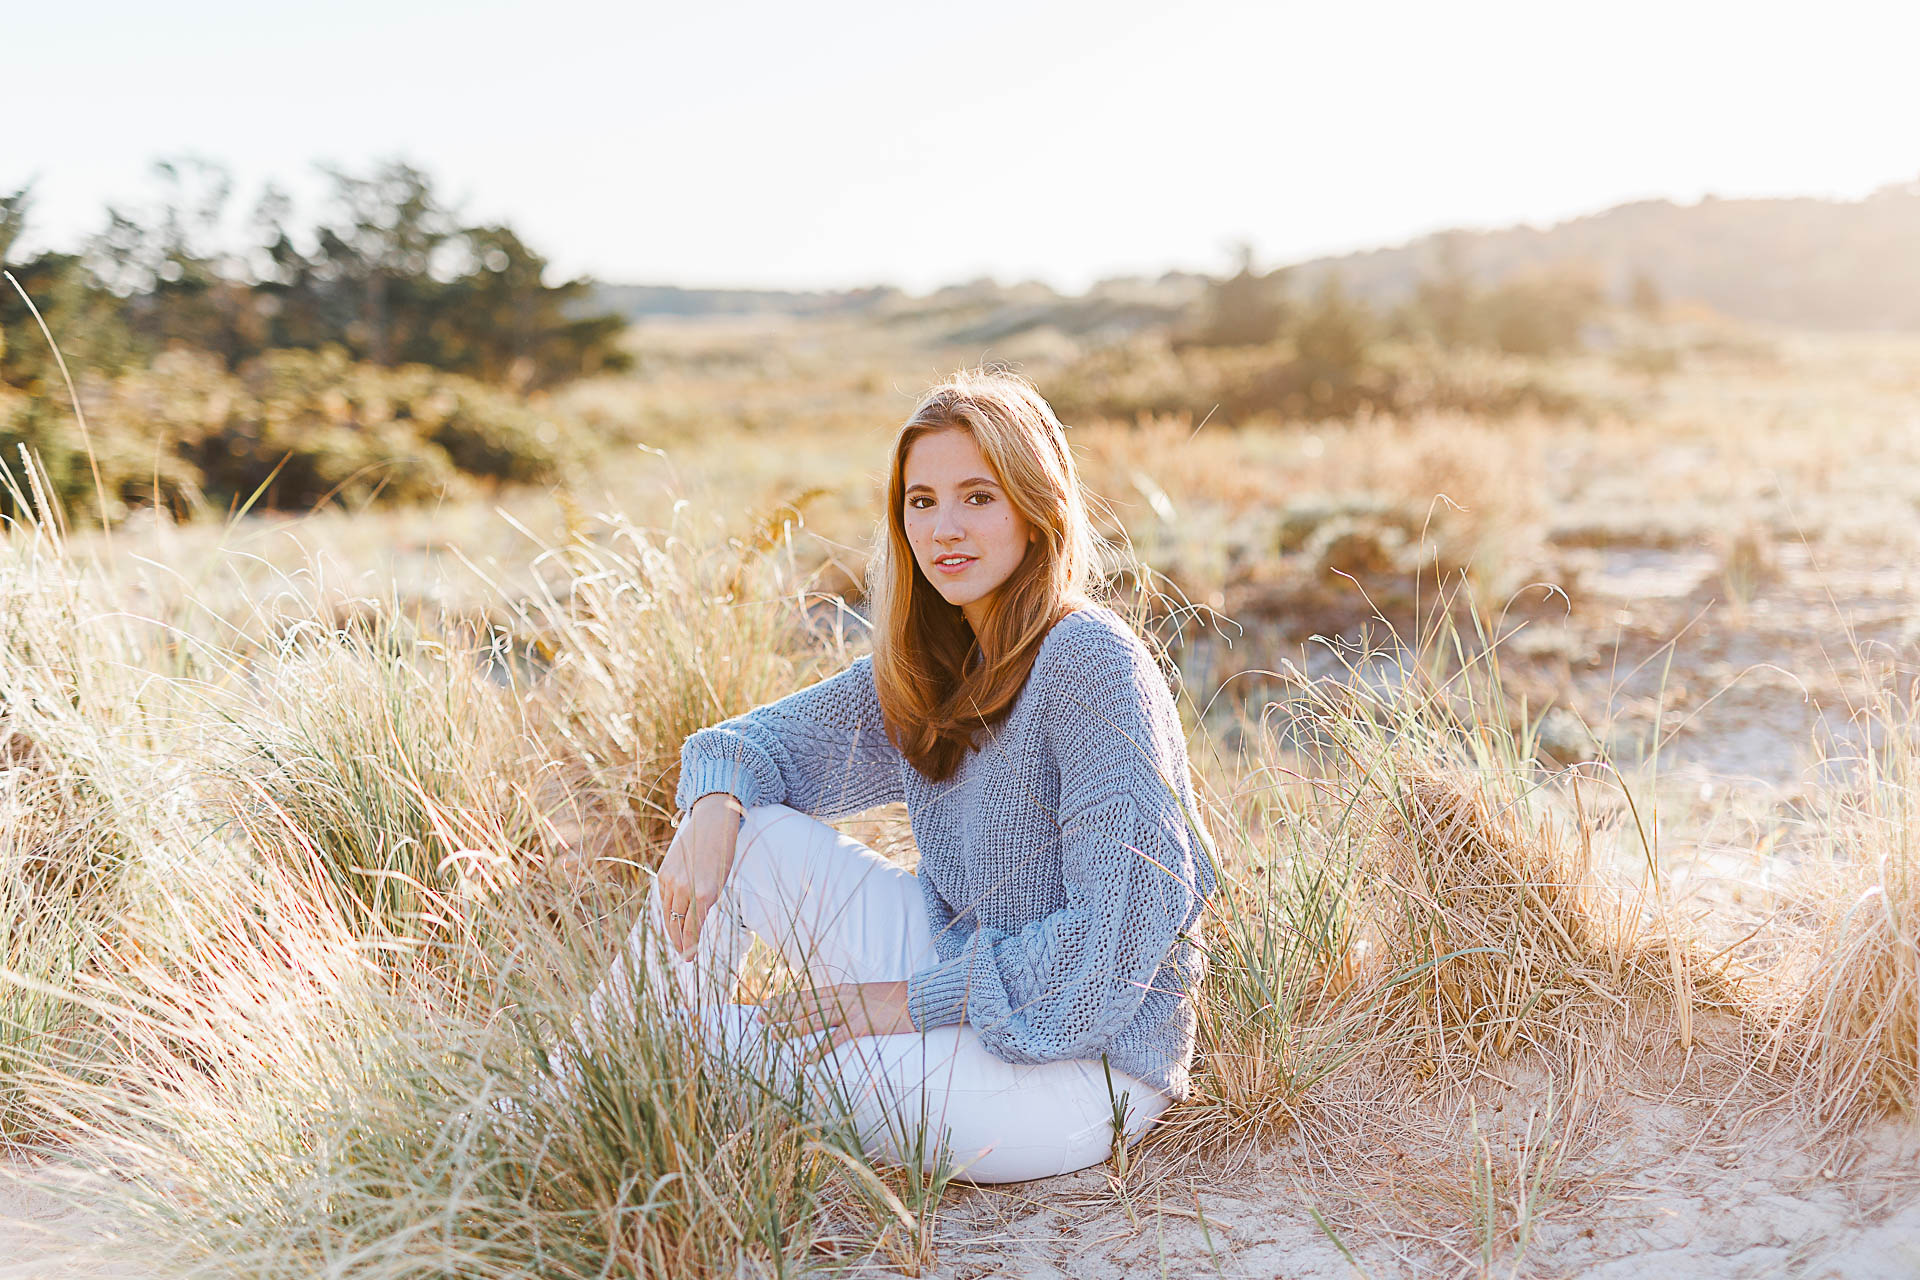 Photo by Cohasset senior photographer Christina Runnals | High school senior girl sitting in beach grass